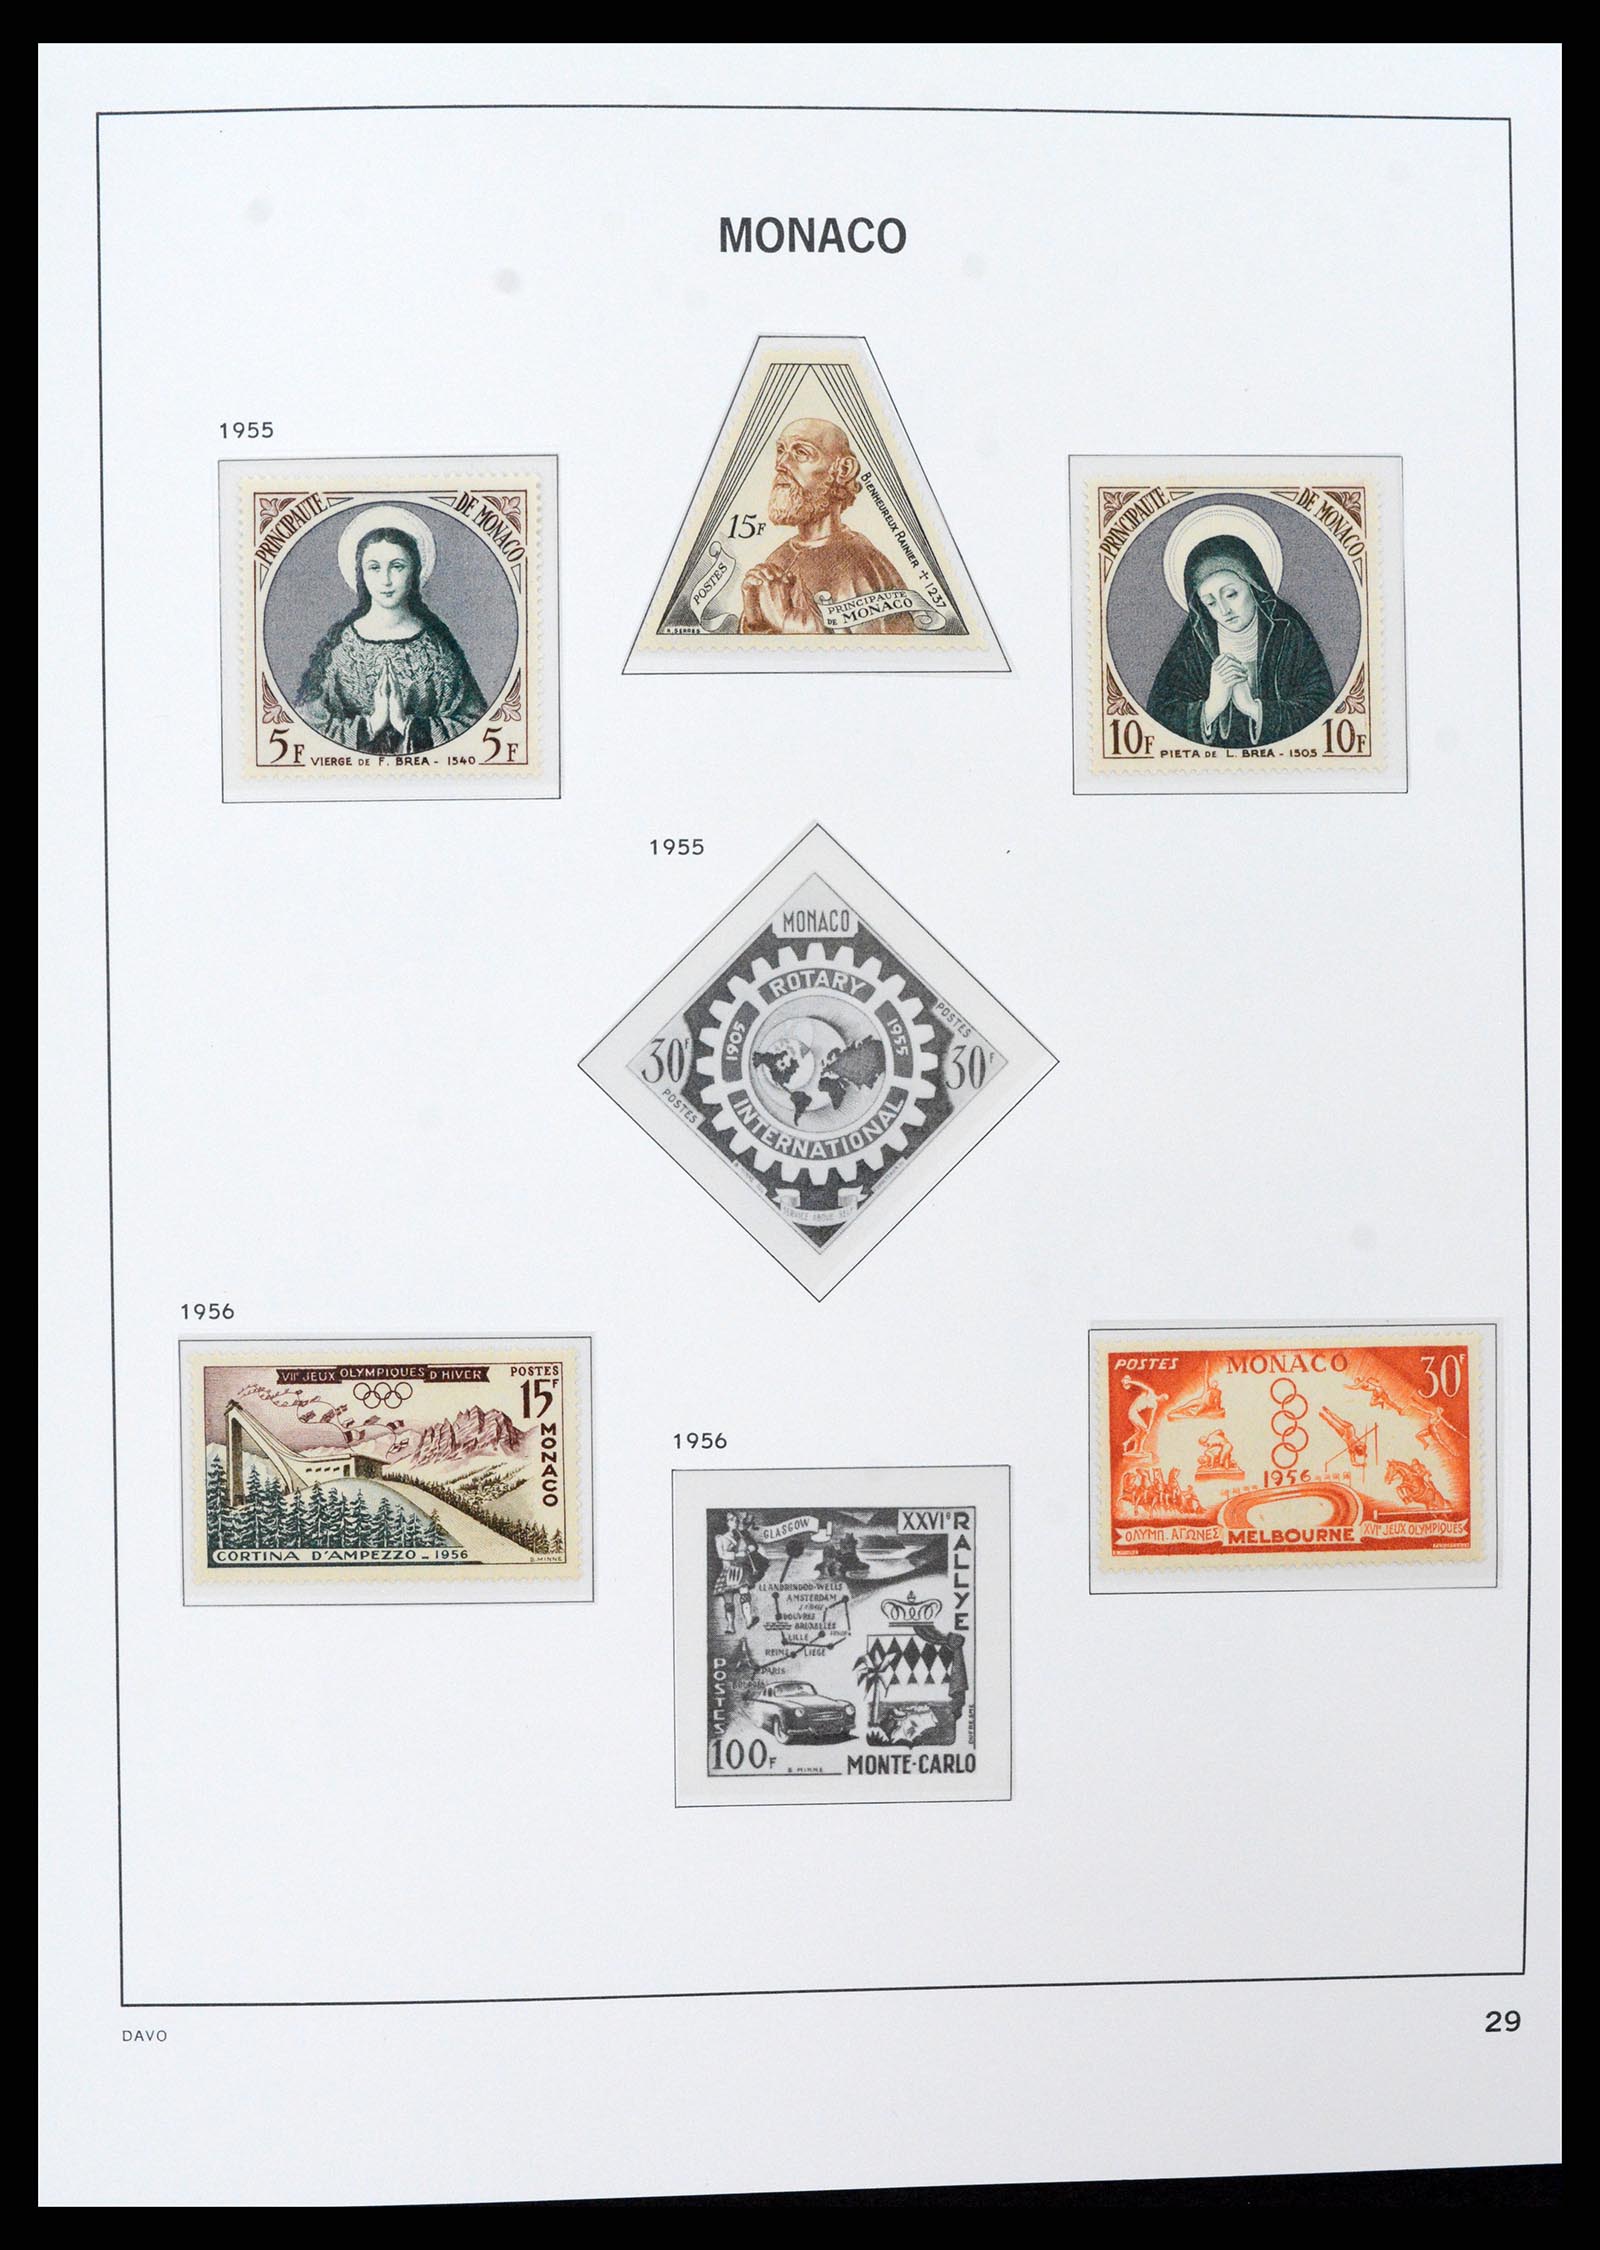 37279 029 - Stamp collection 37279 Monaco 1885-1969.